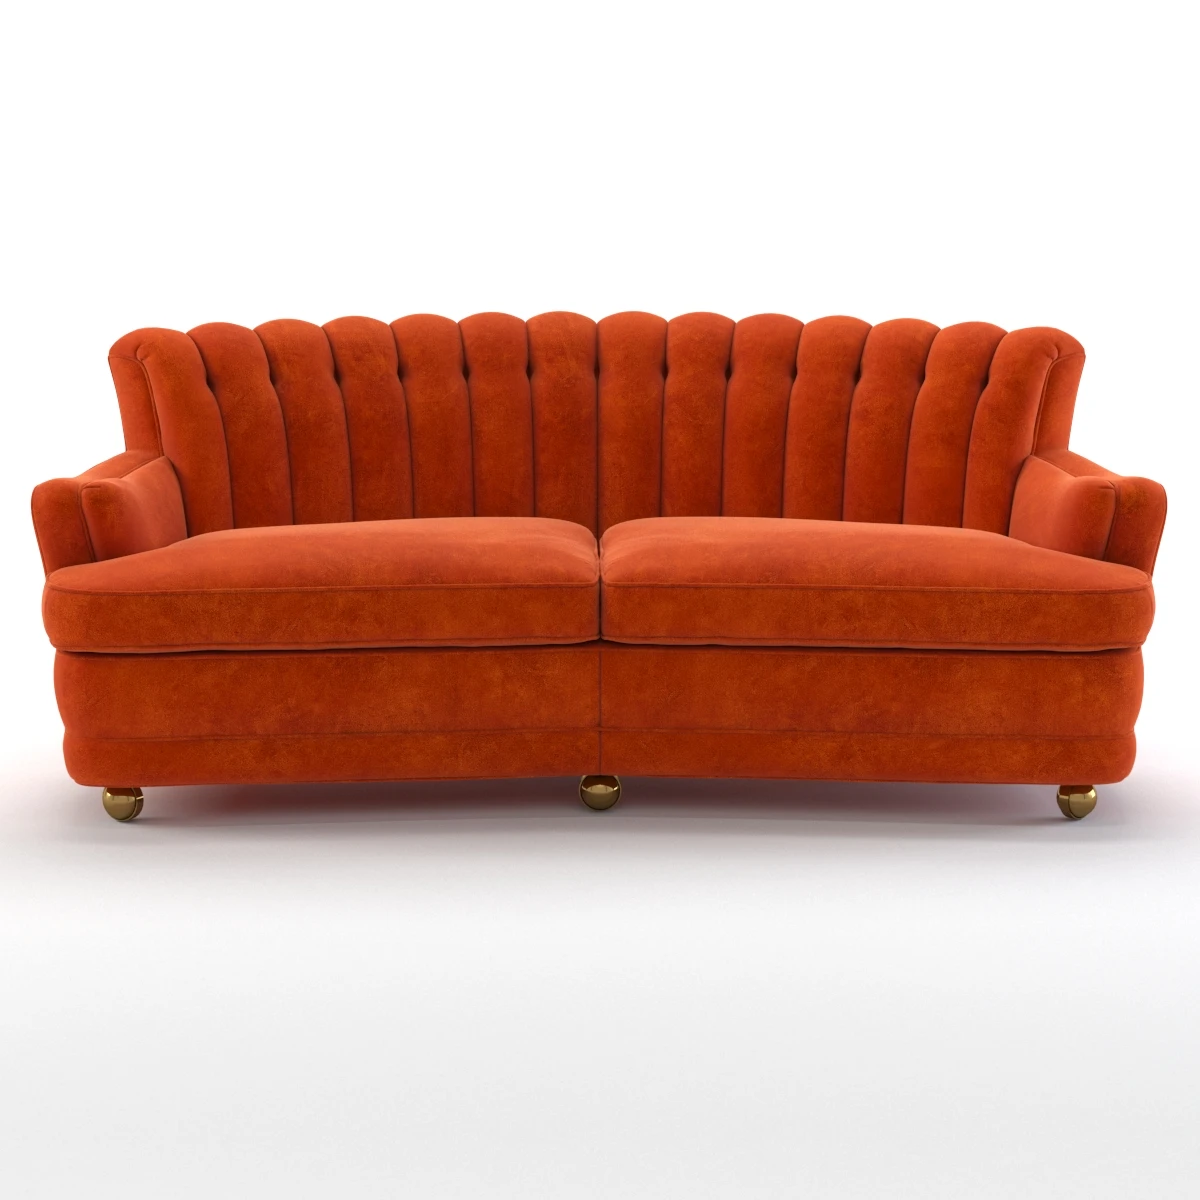 Vintage Couch Furniture Retro Orange Couch 3D Model_04